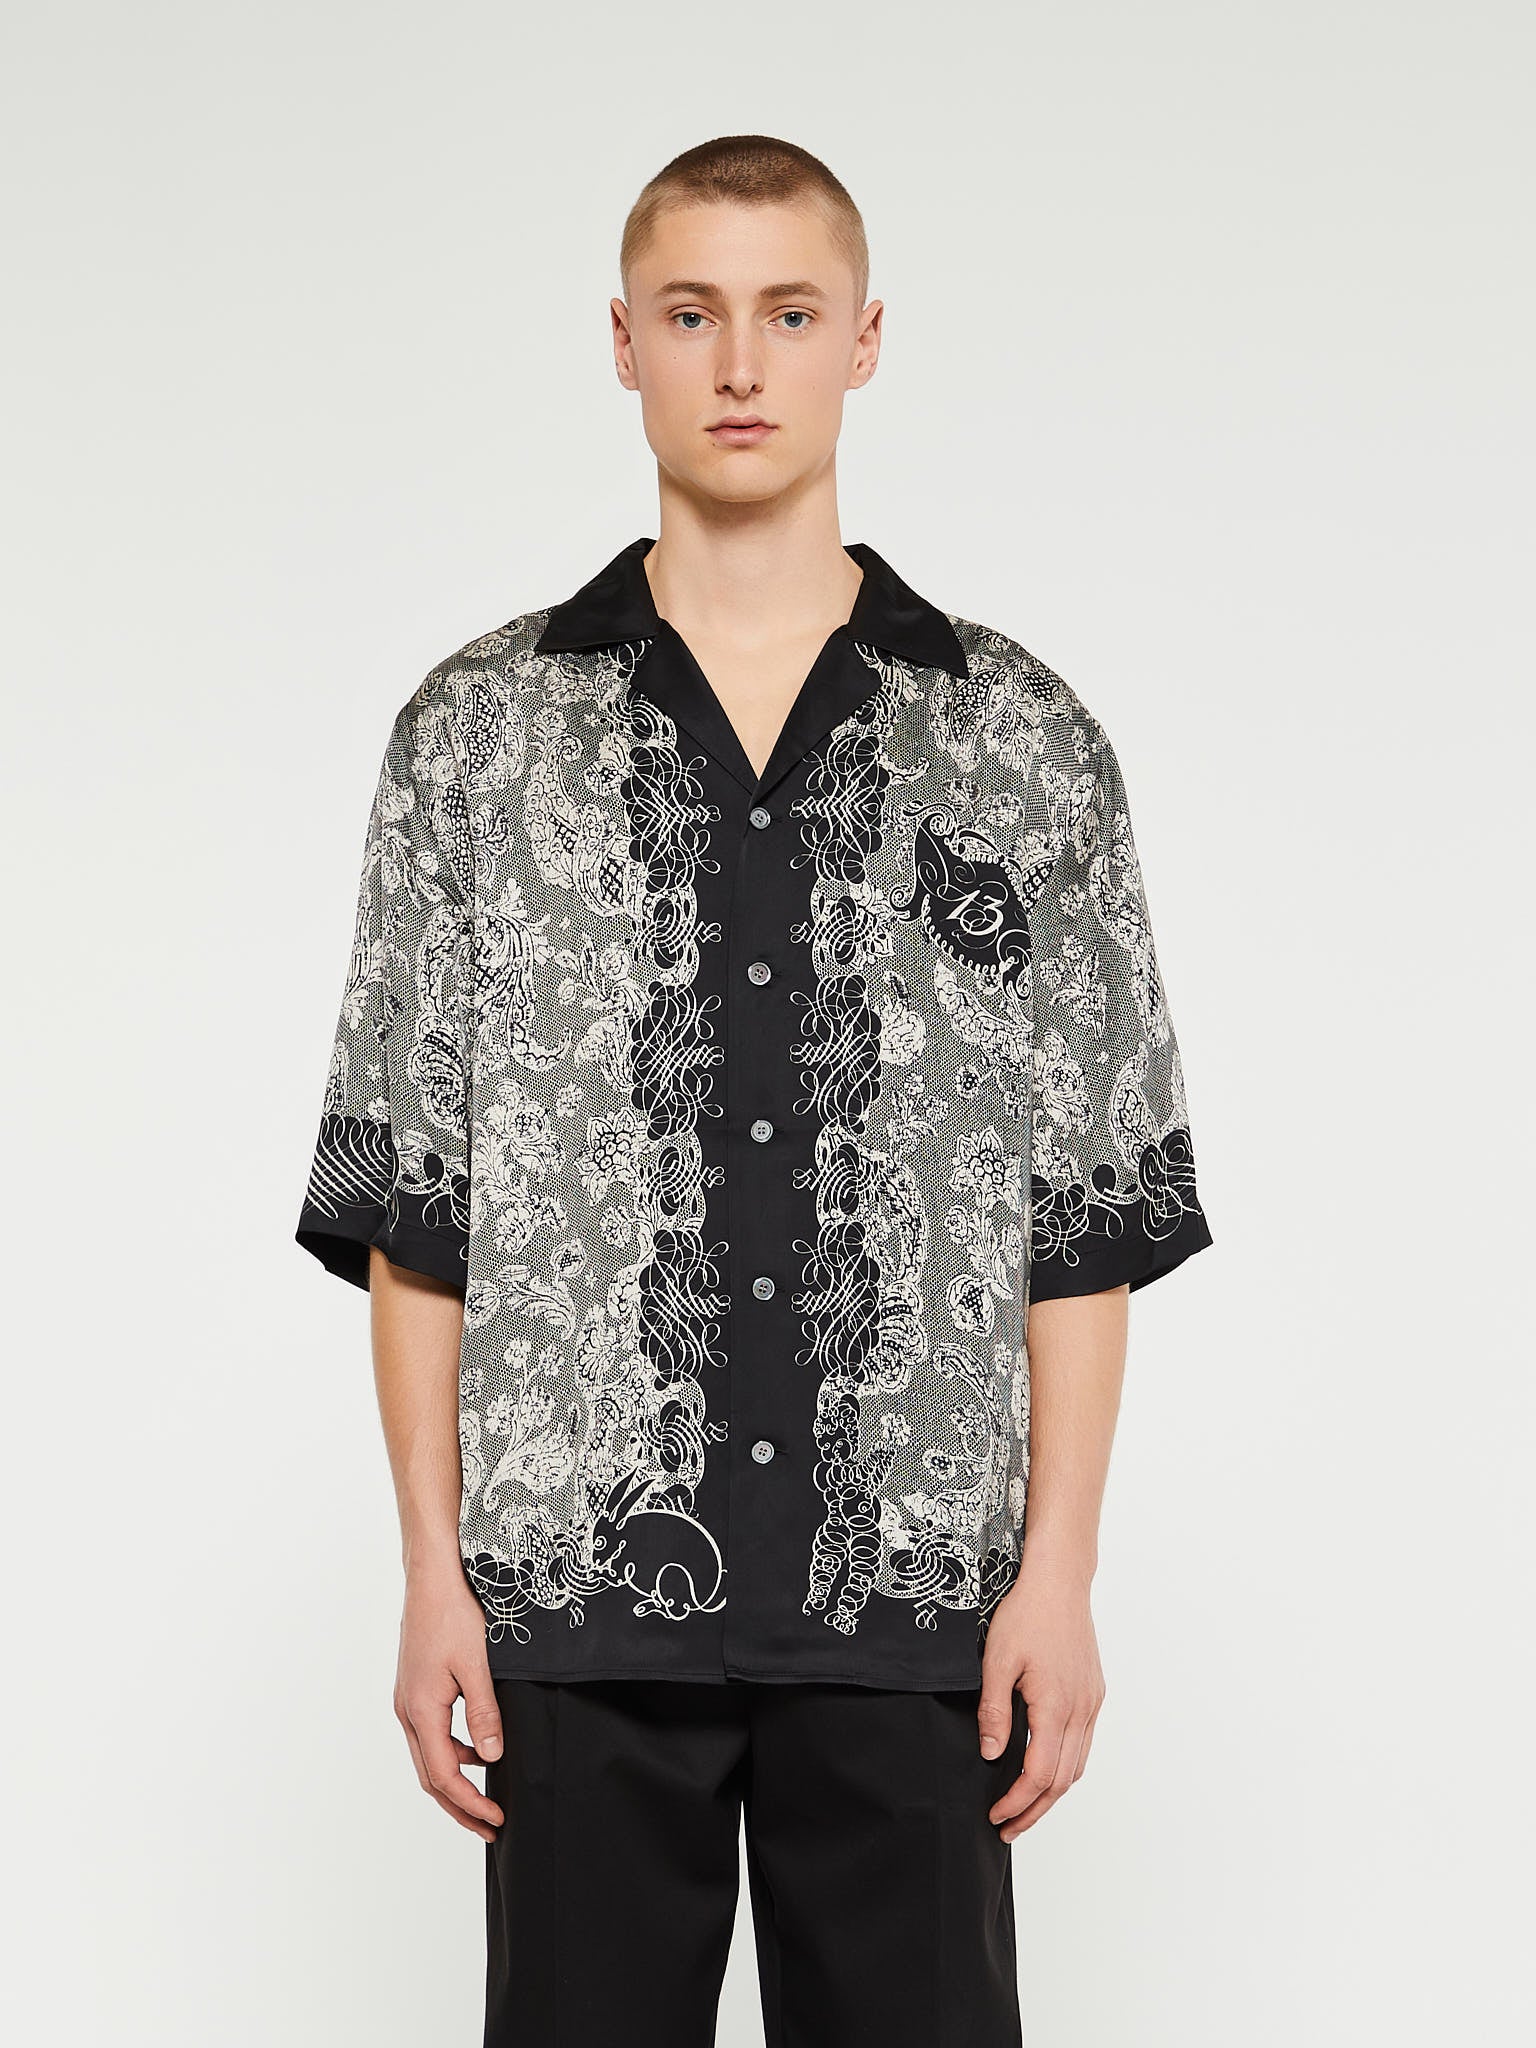 Acne Studios - Print Button-Up Shirt in Black and Ecru